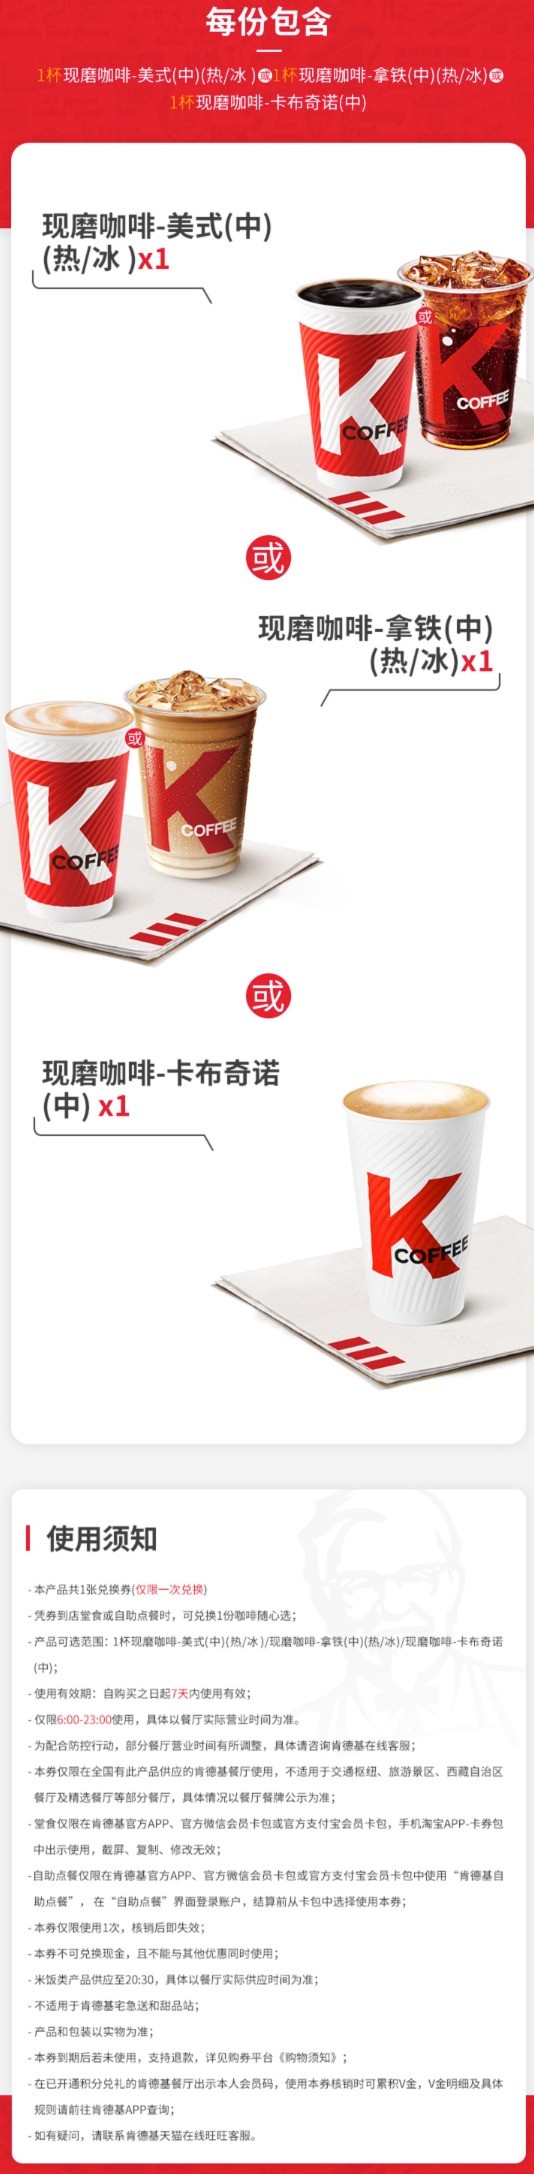 KFC/肯德基 咖啡随心选（5选1）兑换券